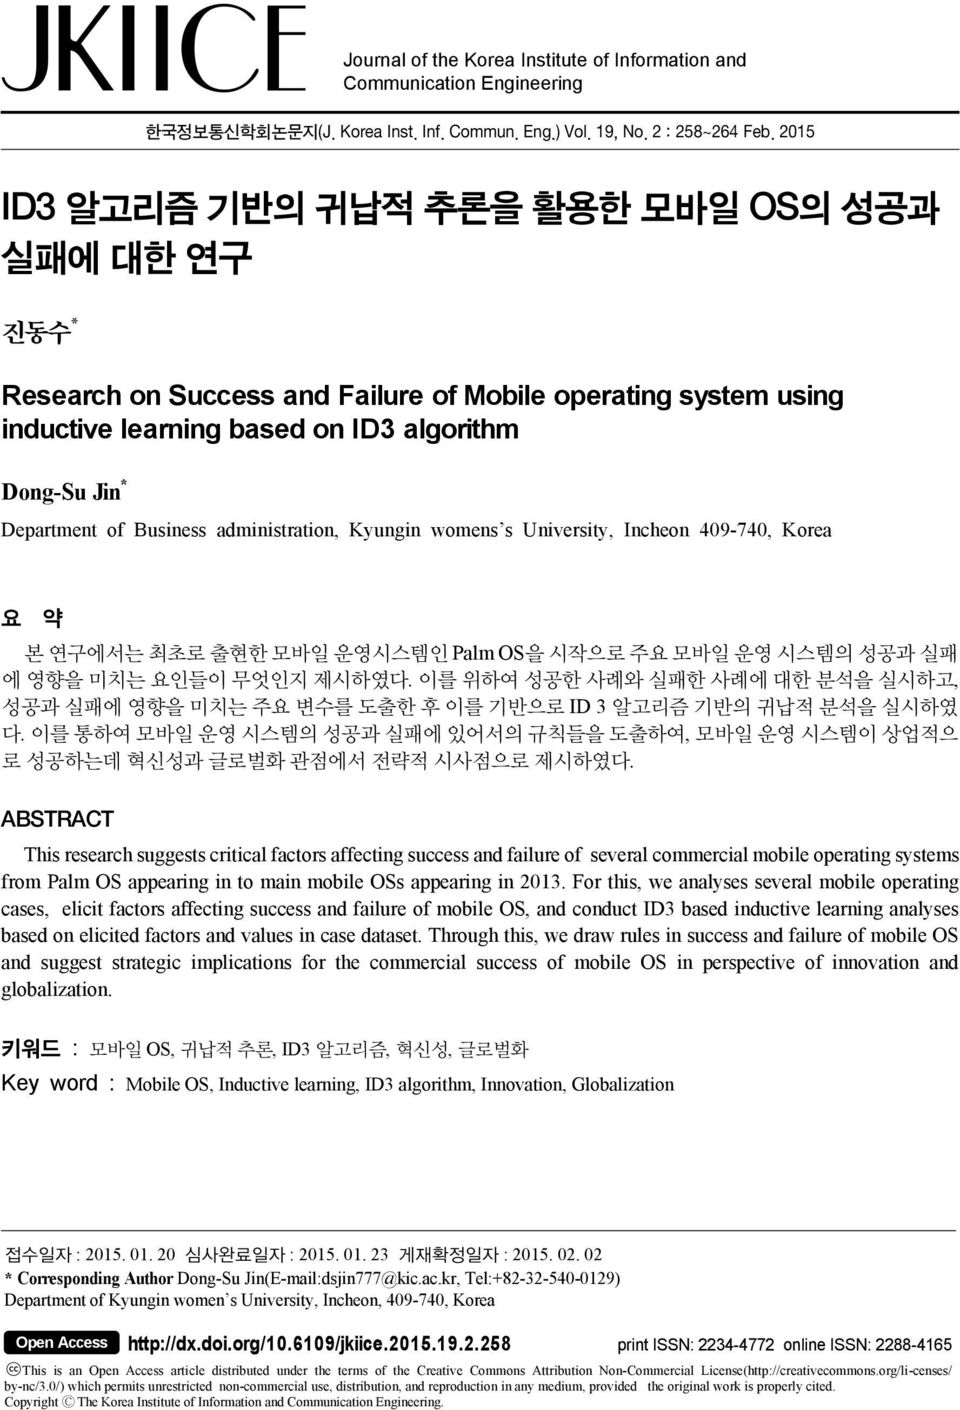 Business administration, Kyungin womens s University, Incheon 409-740, Korea 요 약 본 연구에서는 최초로 출현한 모바일 운영시스템인 Palm OS을 시작으로 주요 모바일 운영 시스템의 성공과 실패 에 영향을 미치는 요인들이 무엇인지 제시하였다.